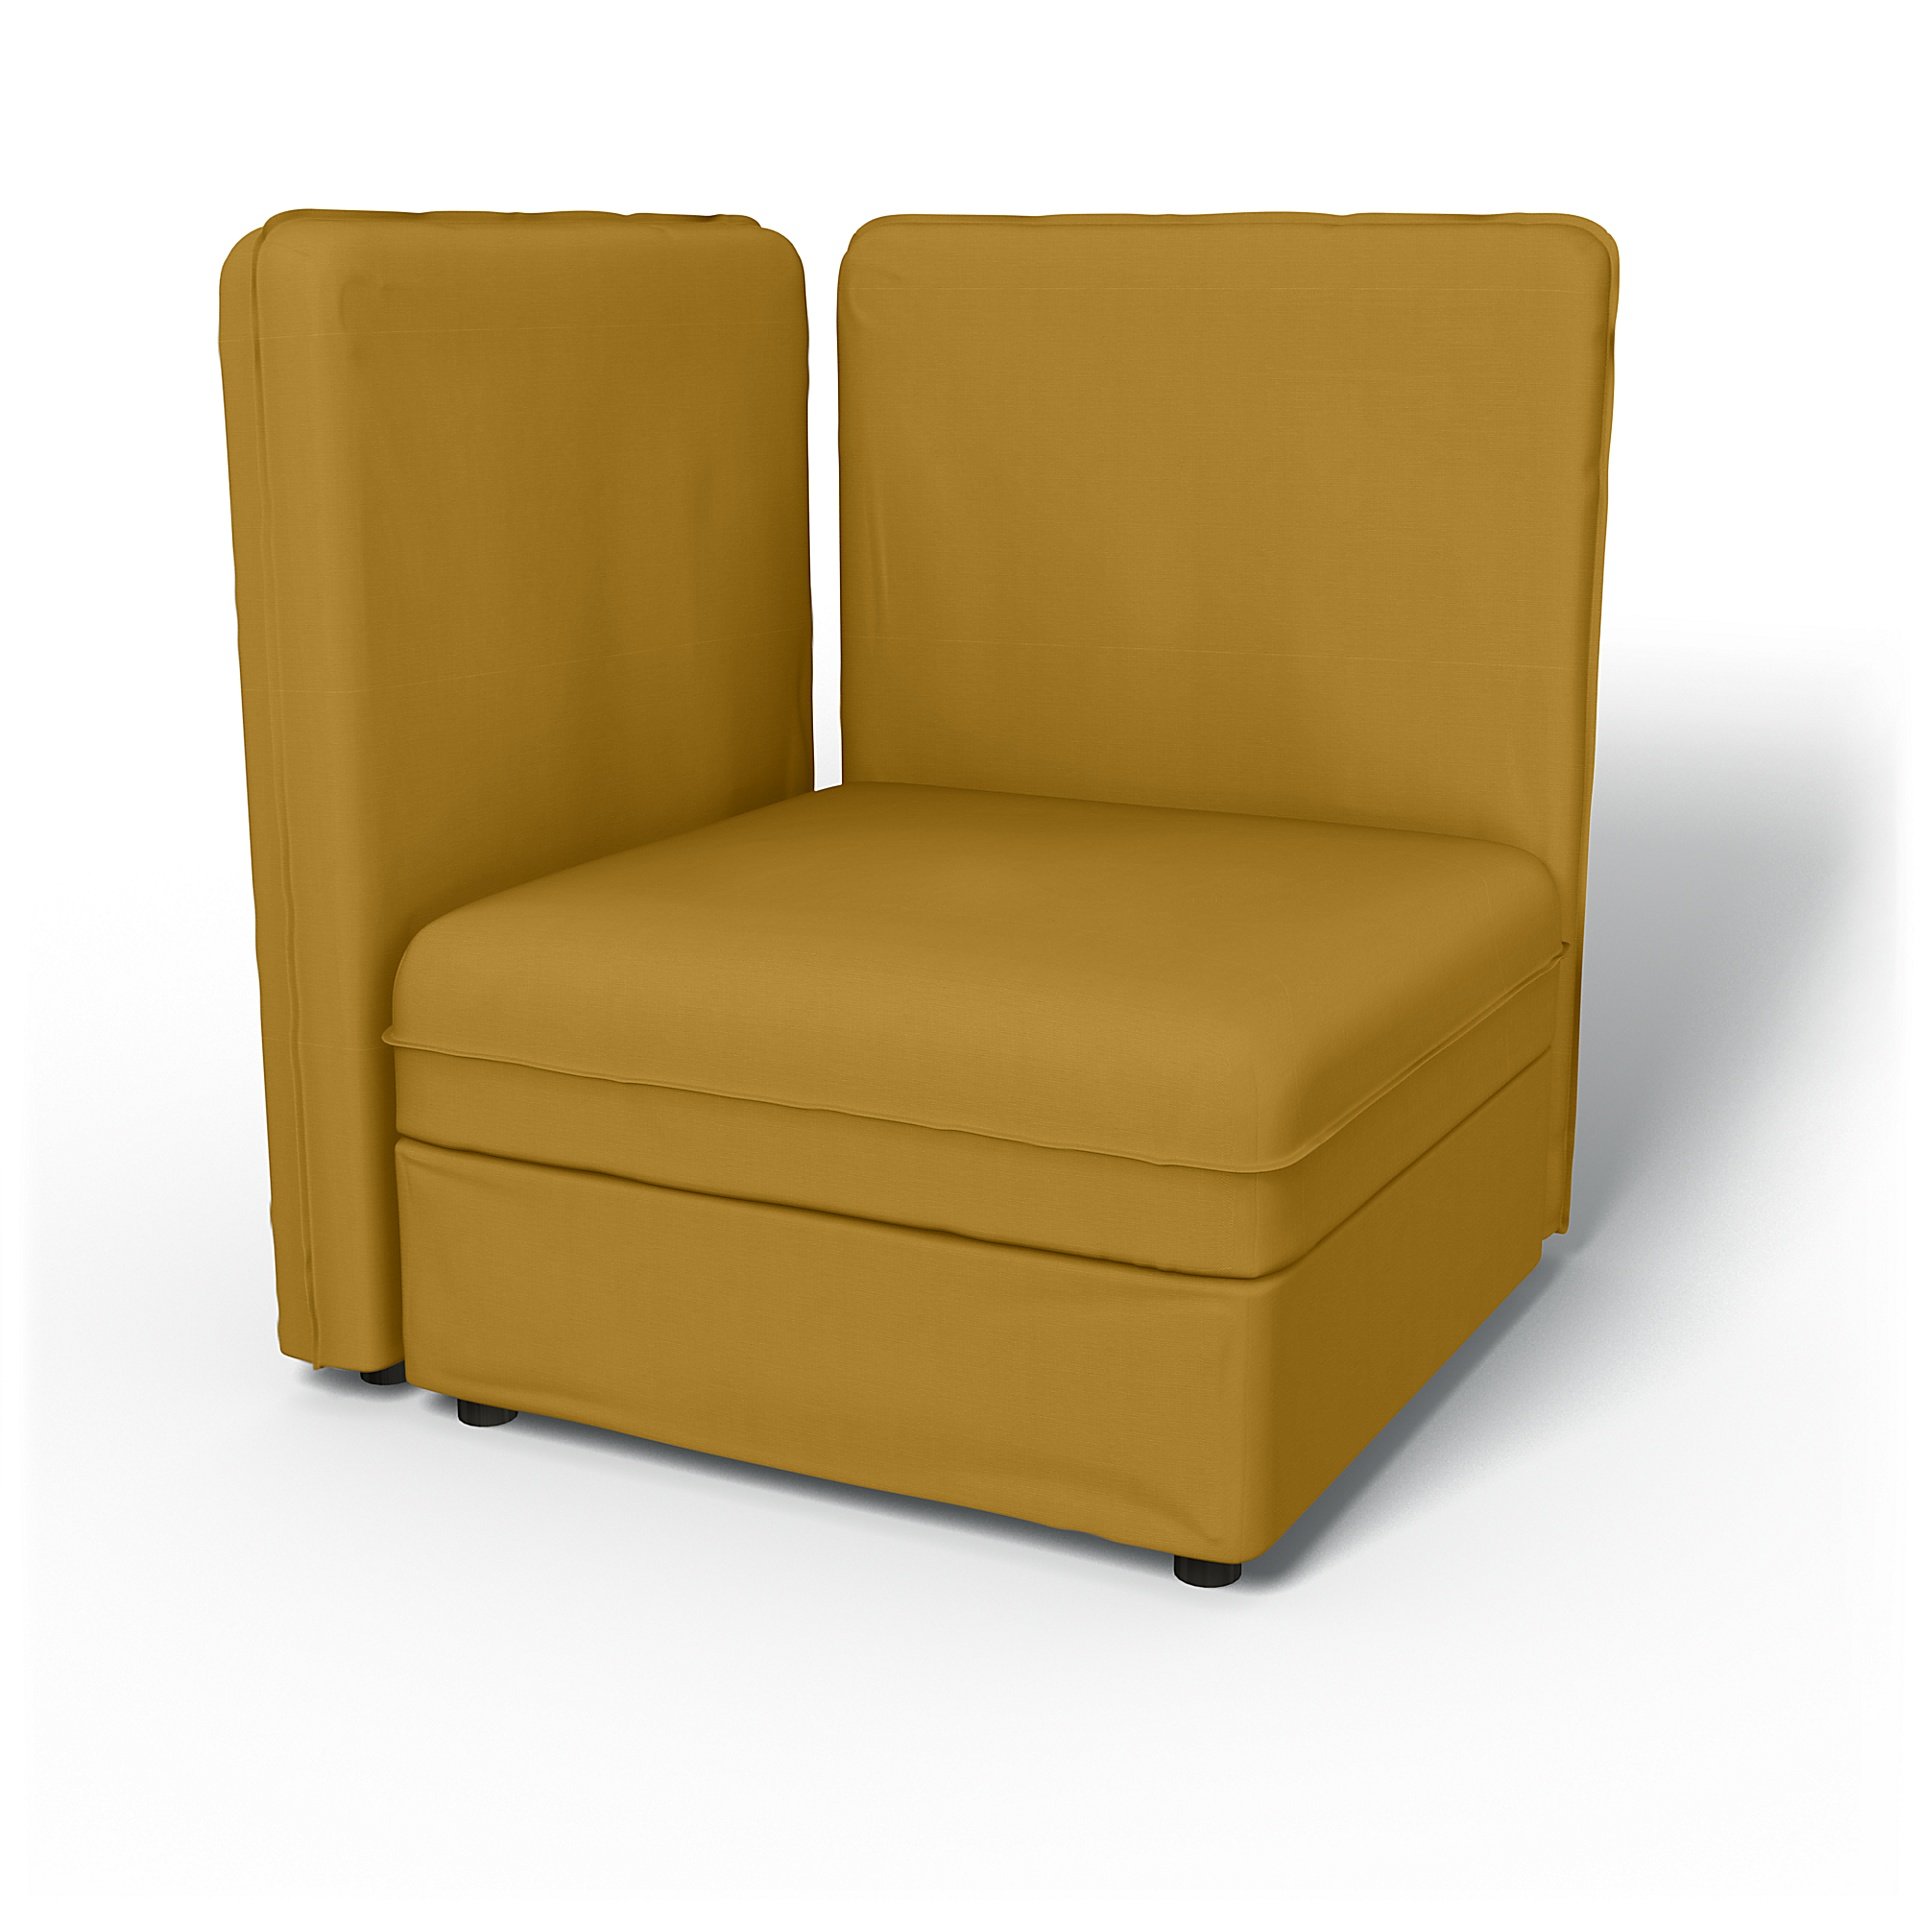 IKEA - Vallentuna Corner Seat Module with High Back and Storage Cover 80x80 32x32in, Honey Mustard, 